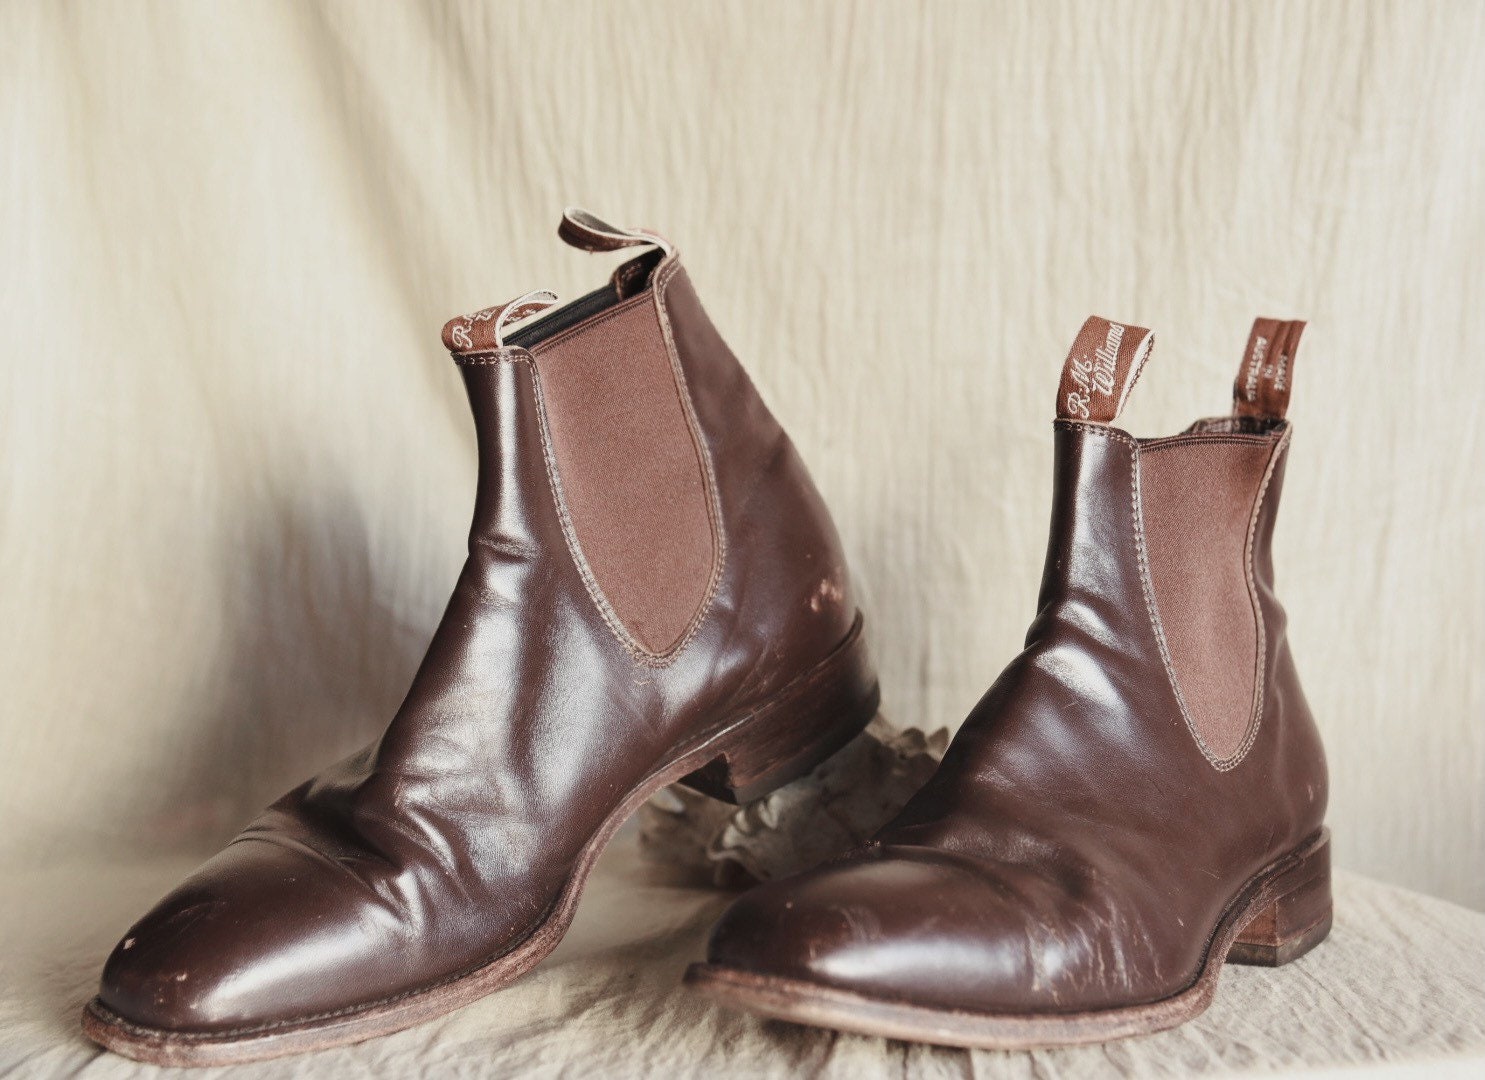  R.M. Williams Men's Classic RM Leather Chelsea Boots,  Chestnut, Brown, 6 Medium US